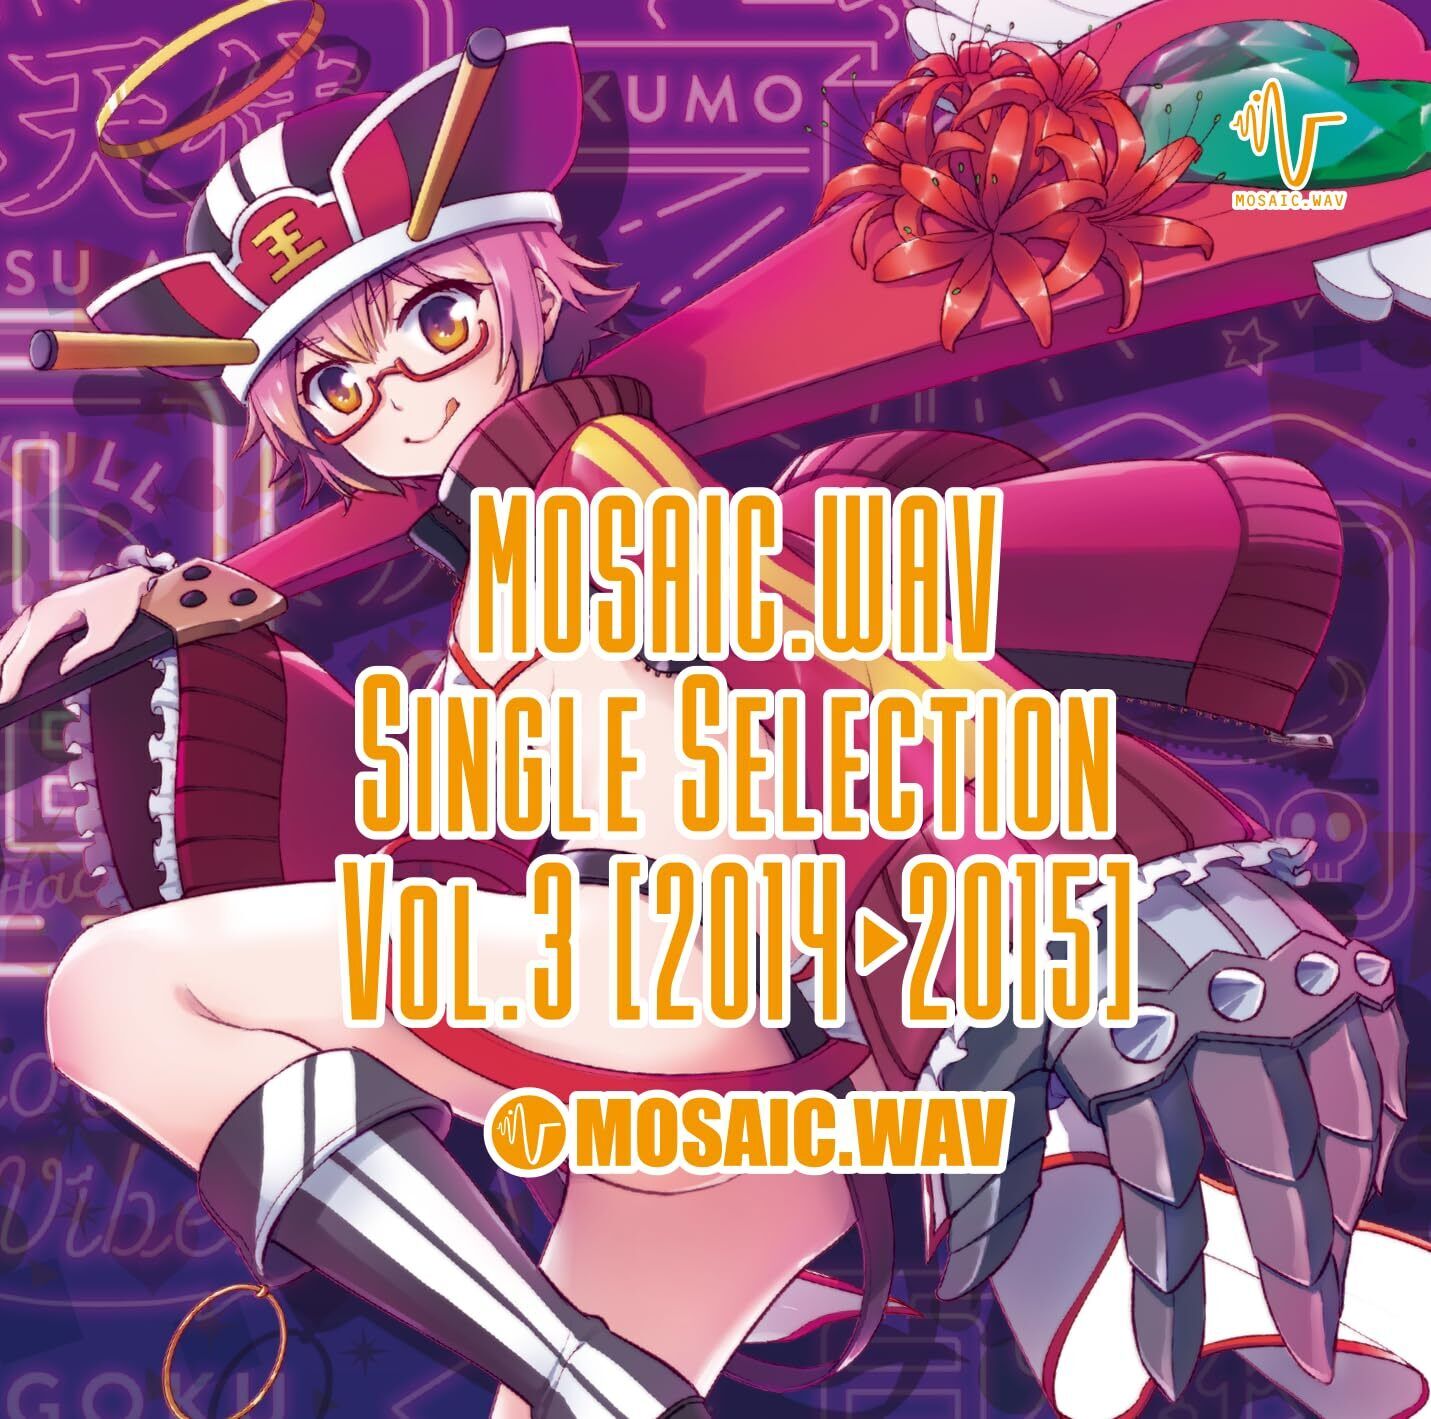 Mosaic.wav Single Selection Vol.3 [2014-2015]